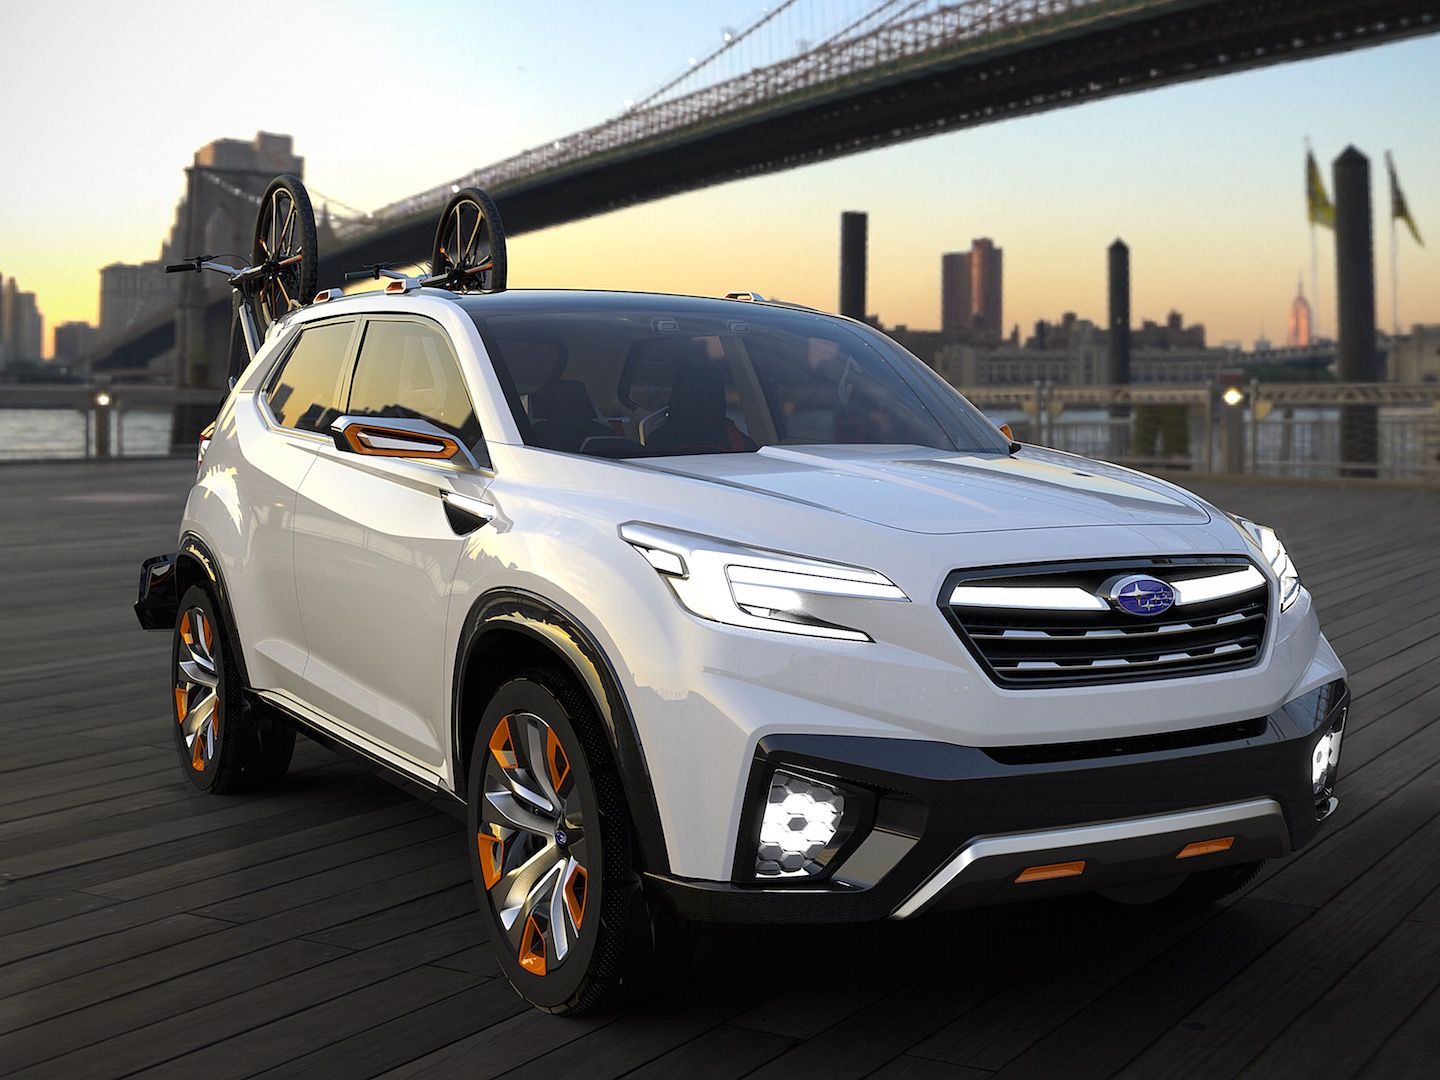 2015 Tokyo Motor Show: Subaru to Unveil Impreza and VIZIV SUV Concepts